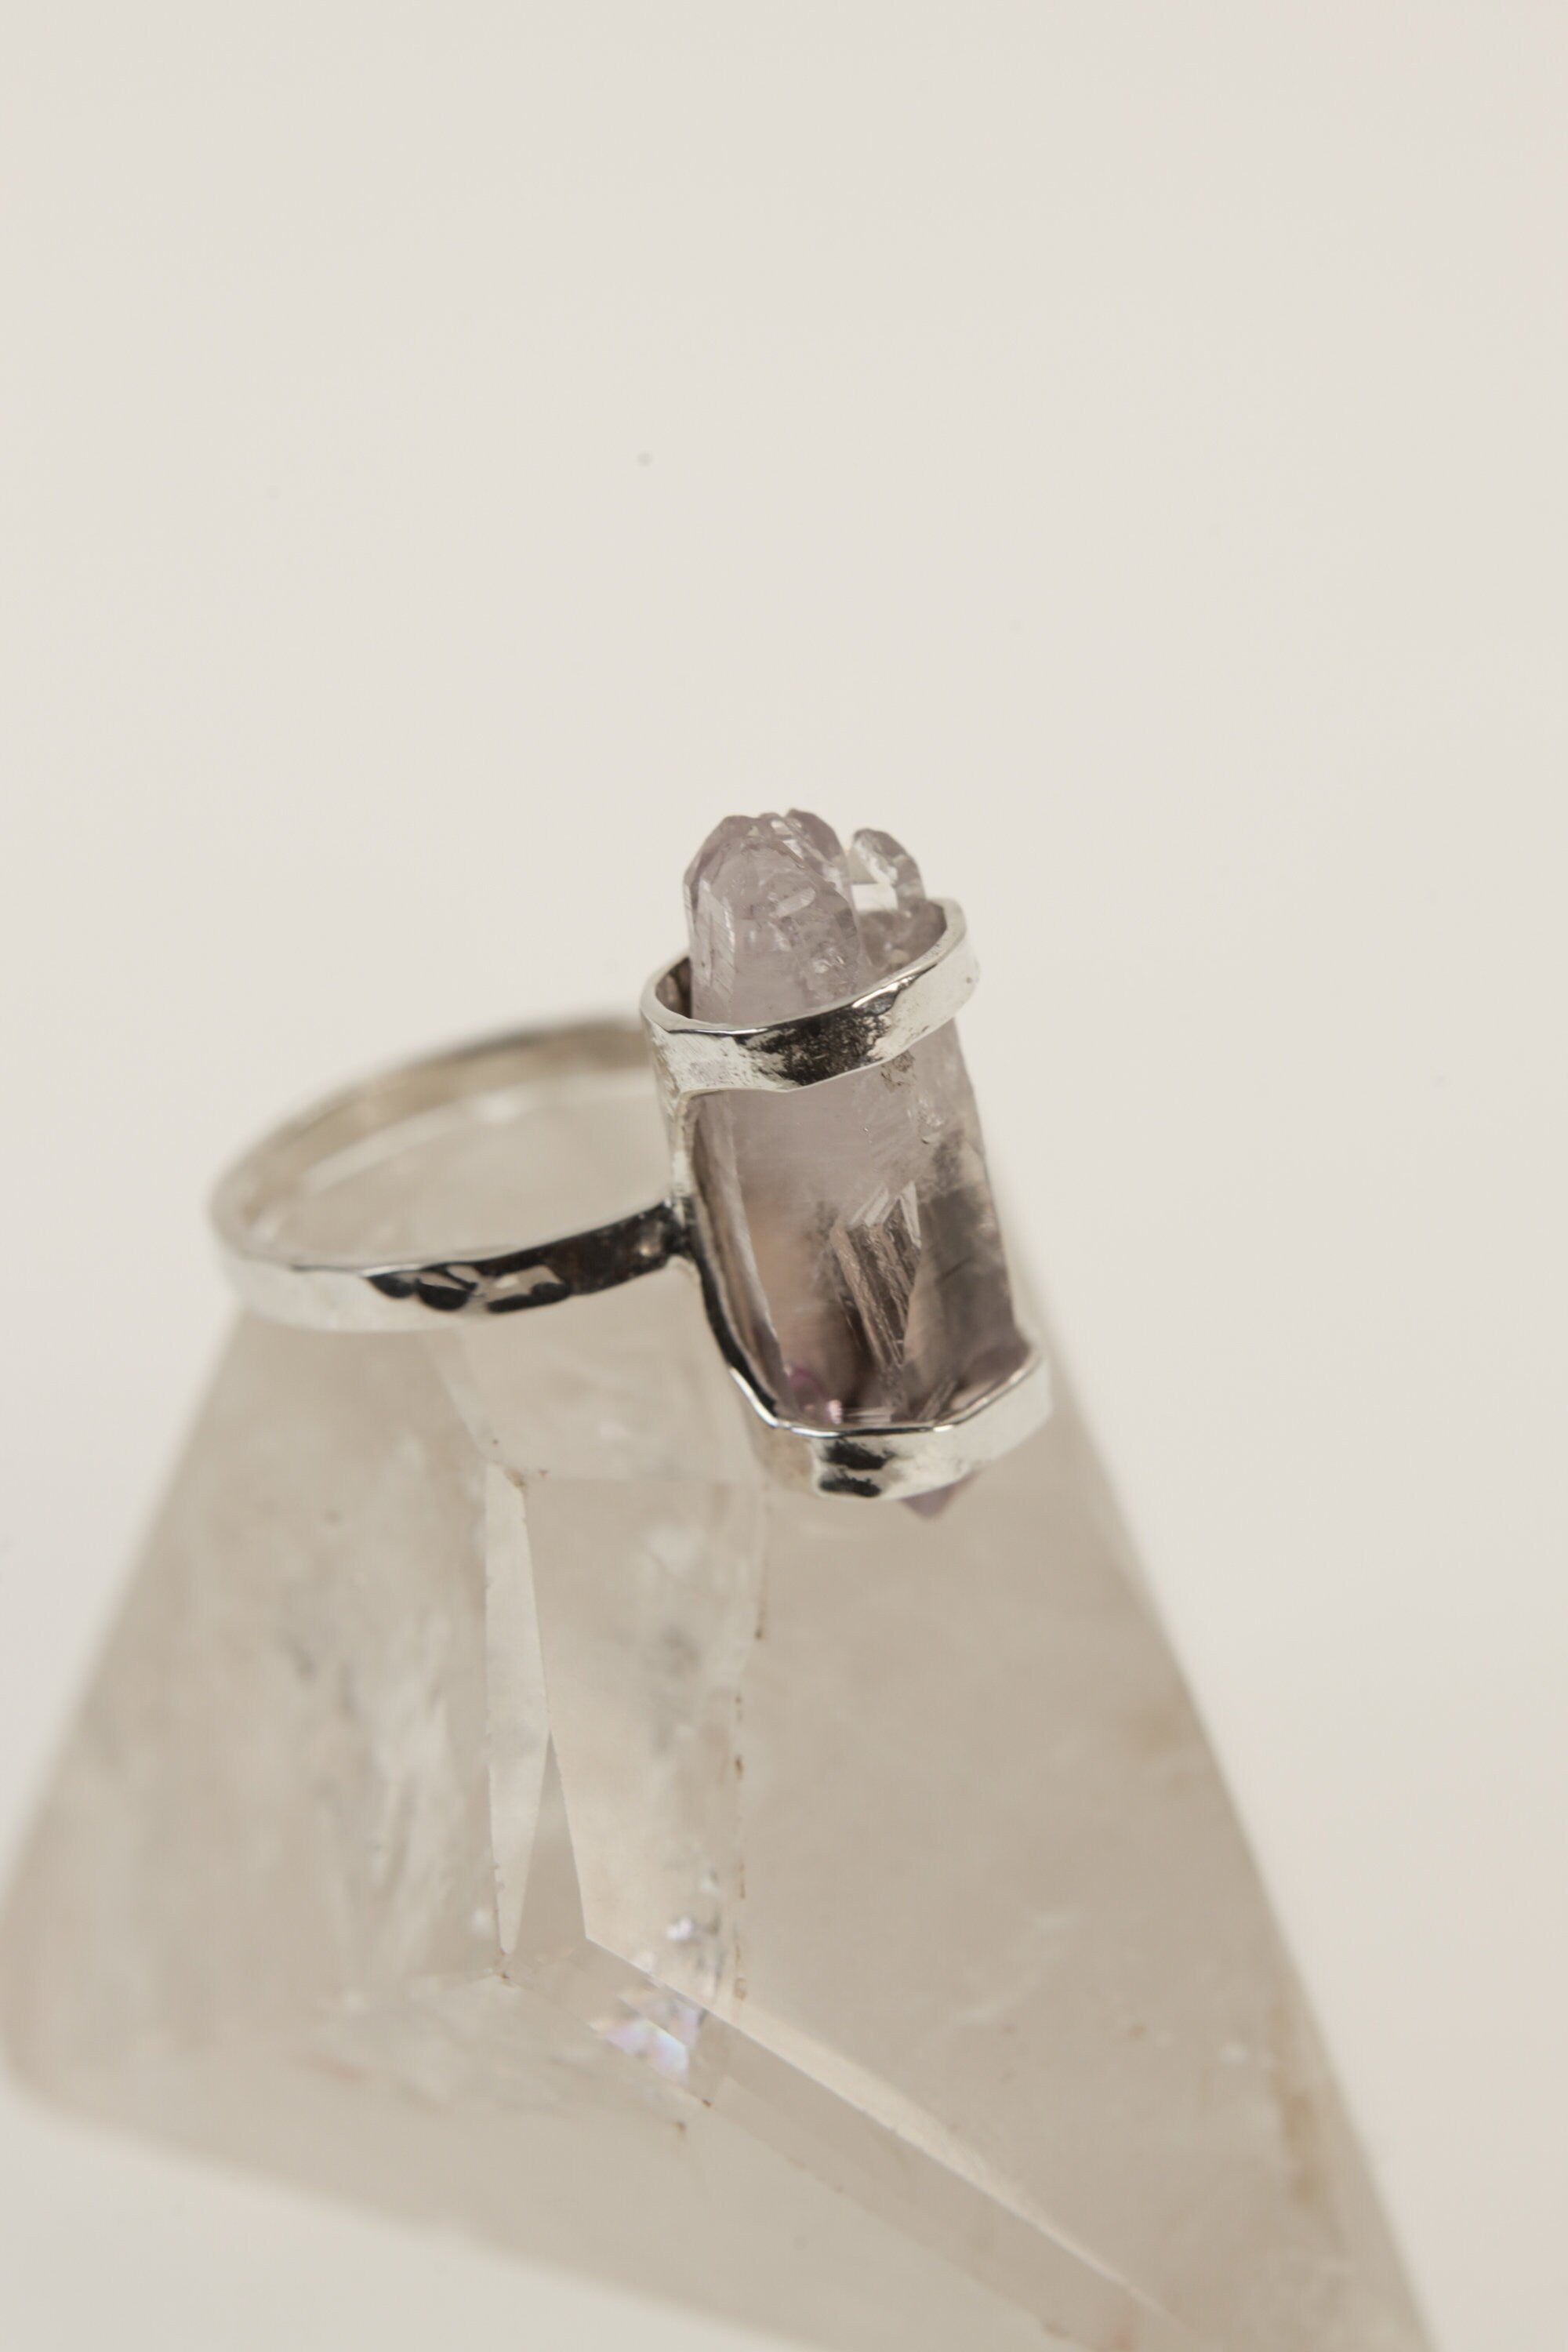 Healing Amethyst Self-Healed Vera Cruz Rin-Hammered & Shiny Finish - Sterling Silver Ring - Size 6 3/4 US